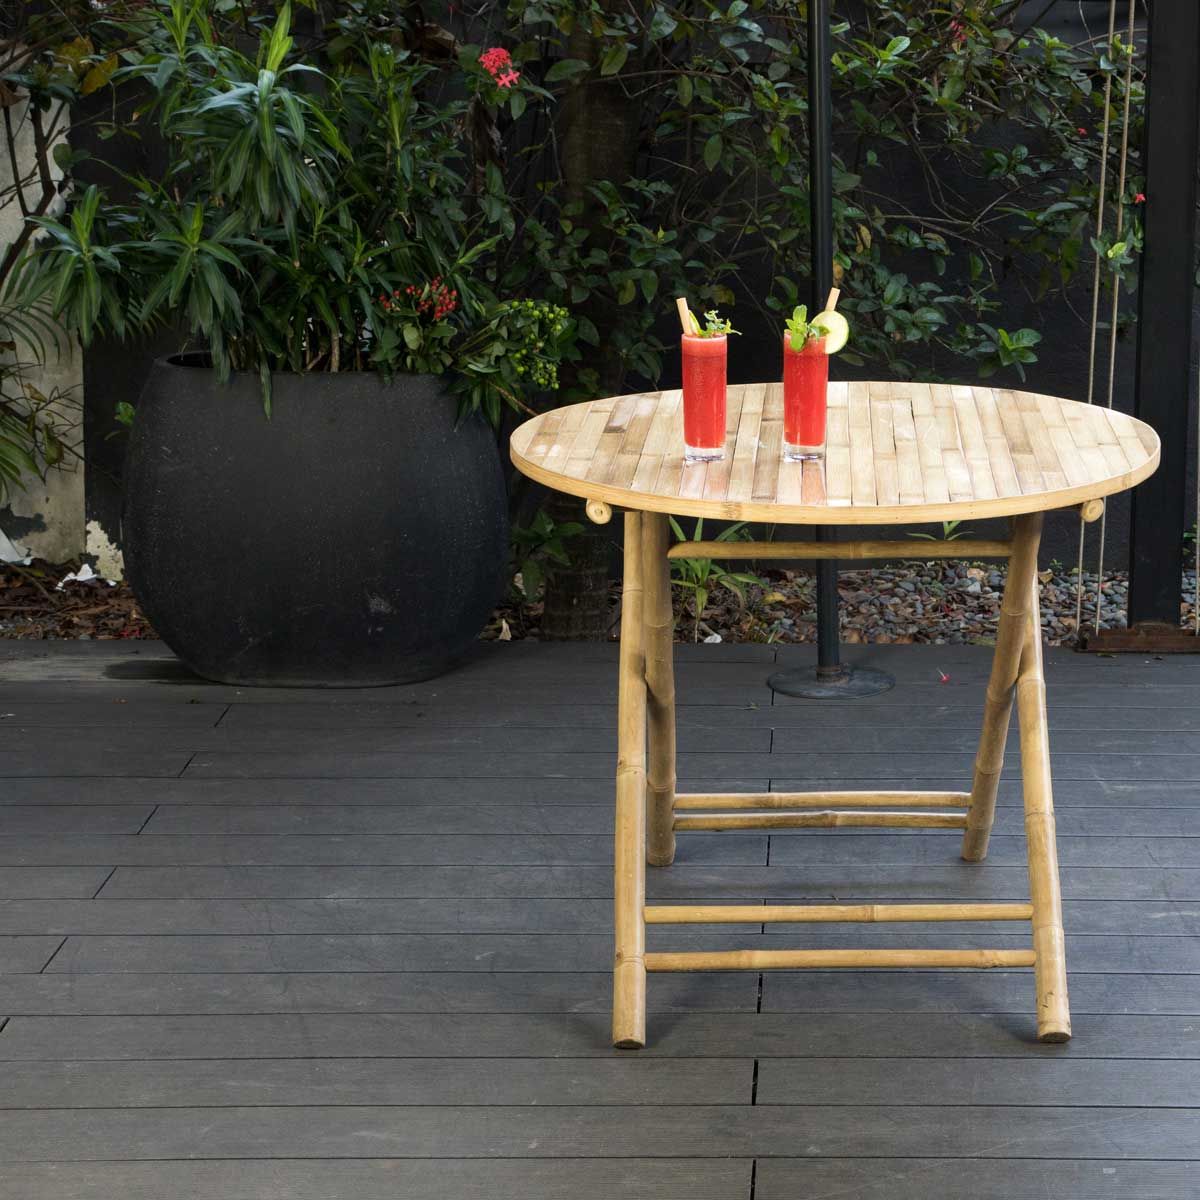 Table de jardin en teck en résine tressée ronde pliante